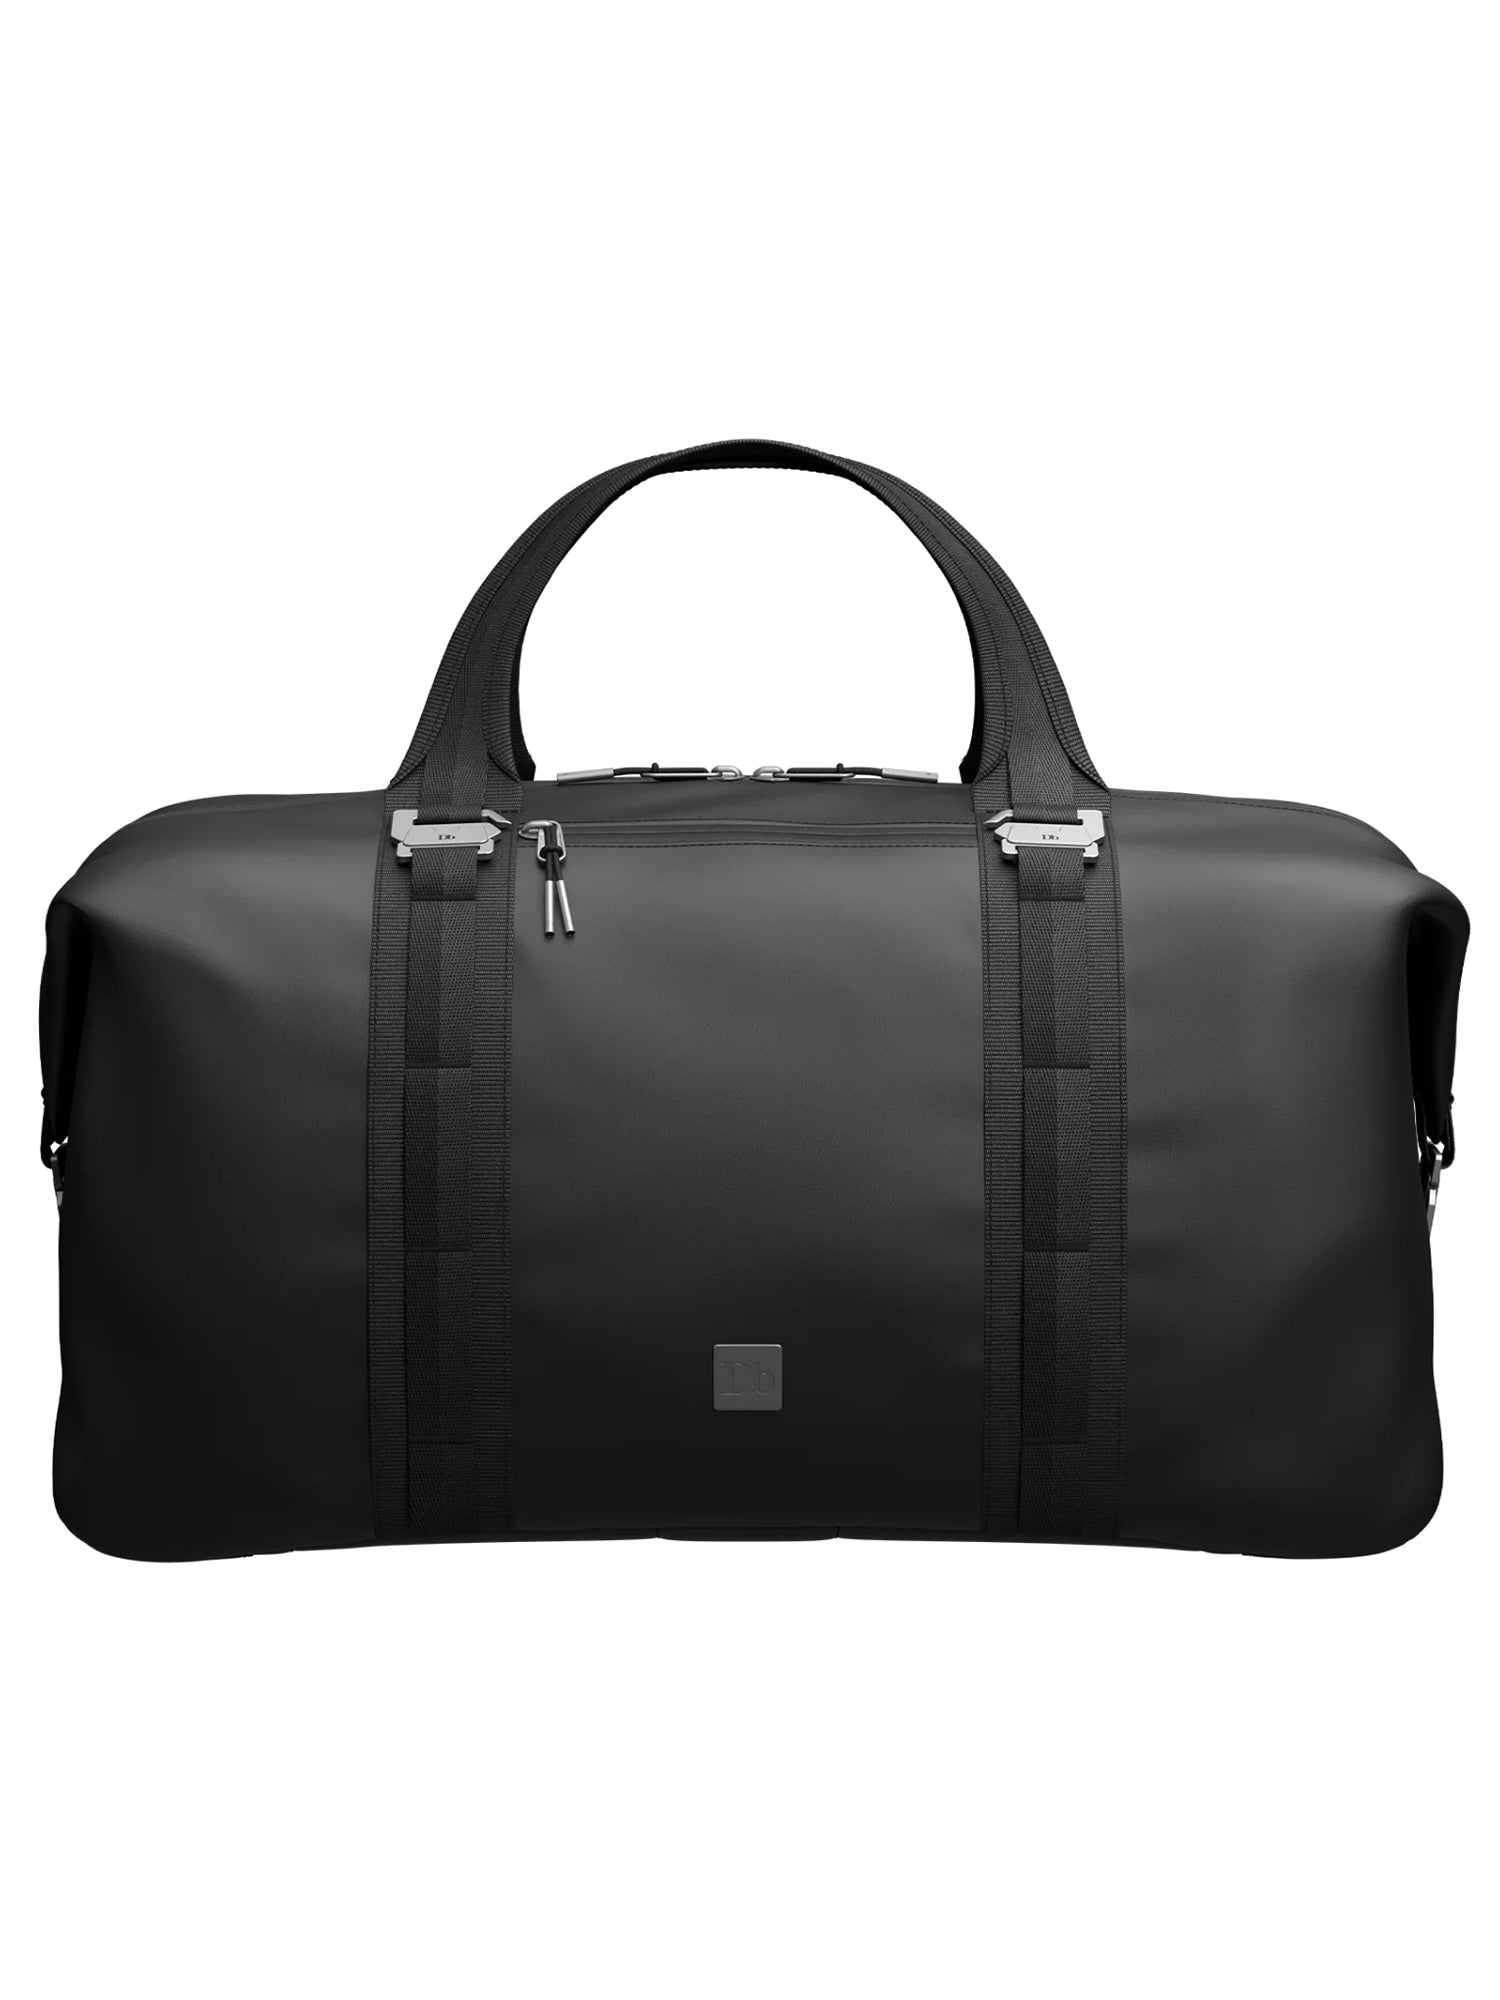 Personalized Weekender Bag | Marleylilly